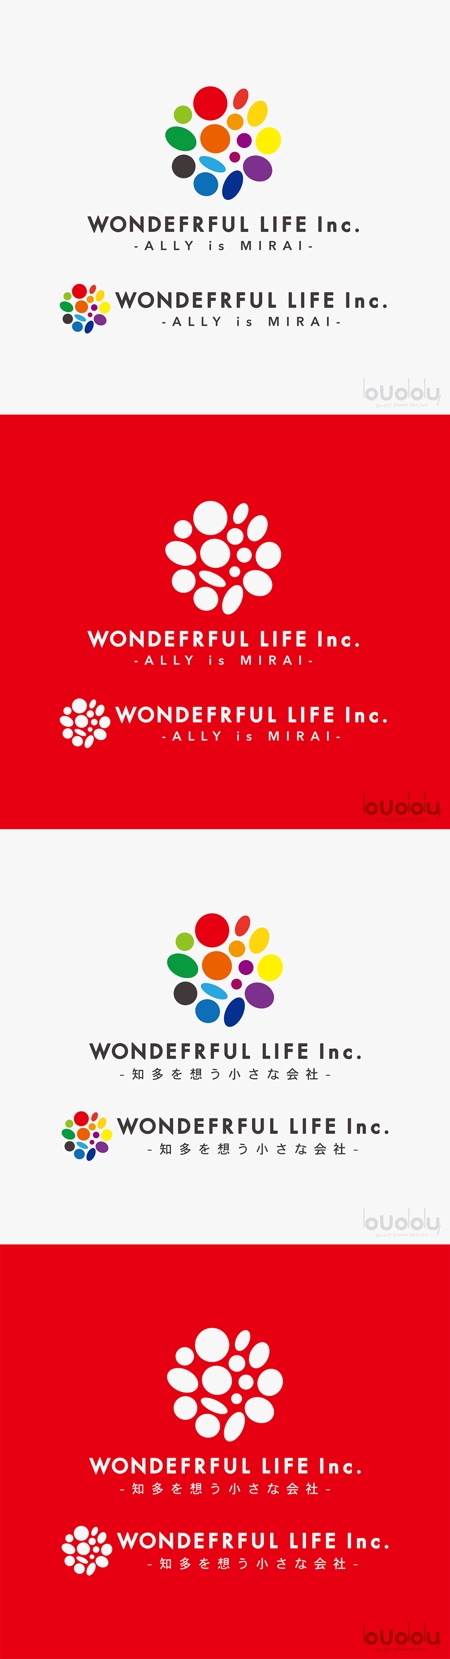 buddy knows design (kndworking_2016)さんのシャンプーなどを卸す会社「WONDEFRFUL LIFE Inc.」のロゴへの提案